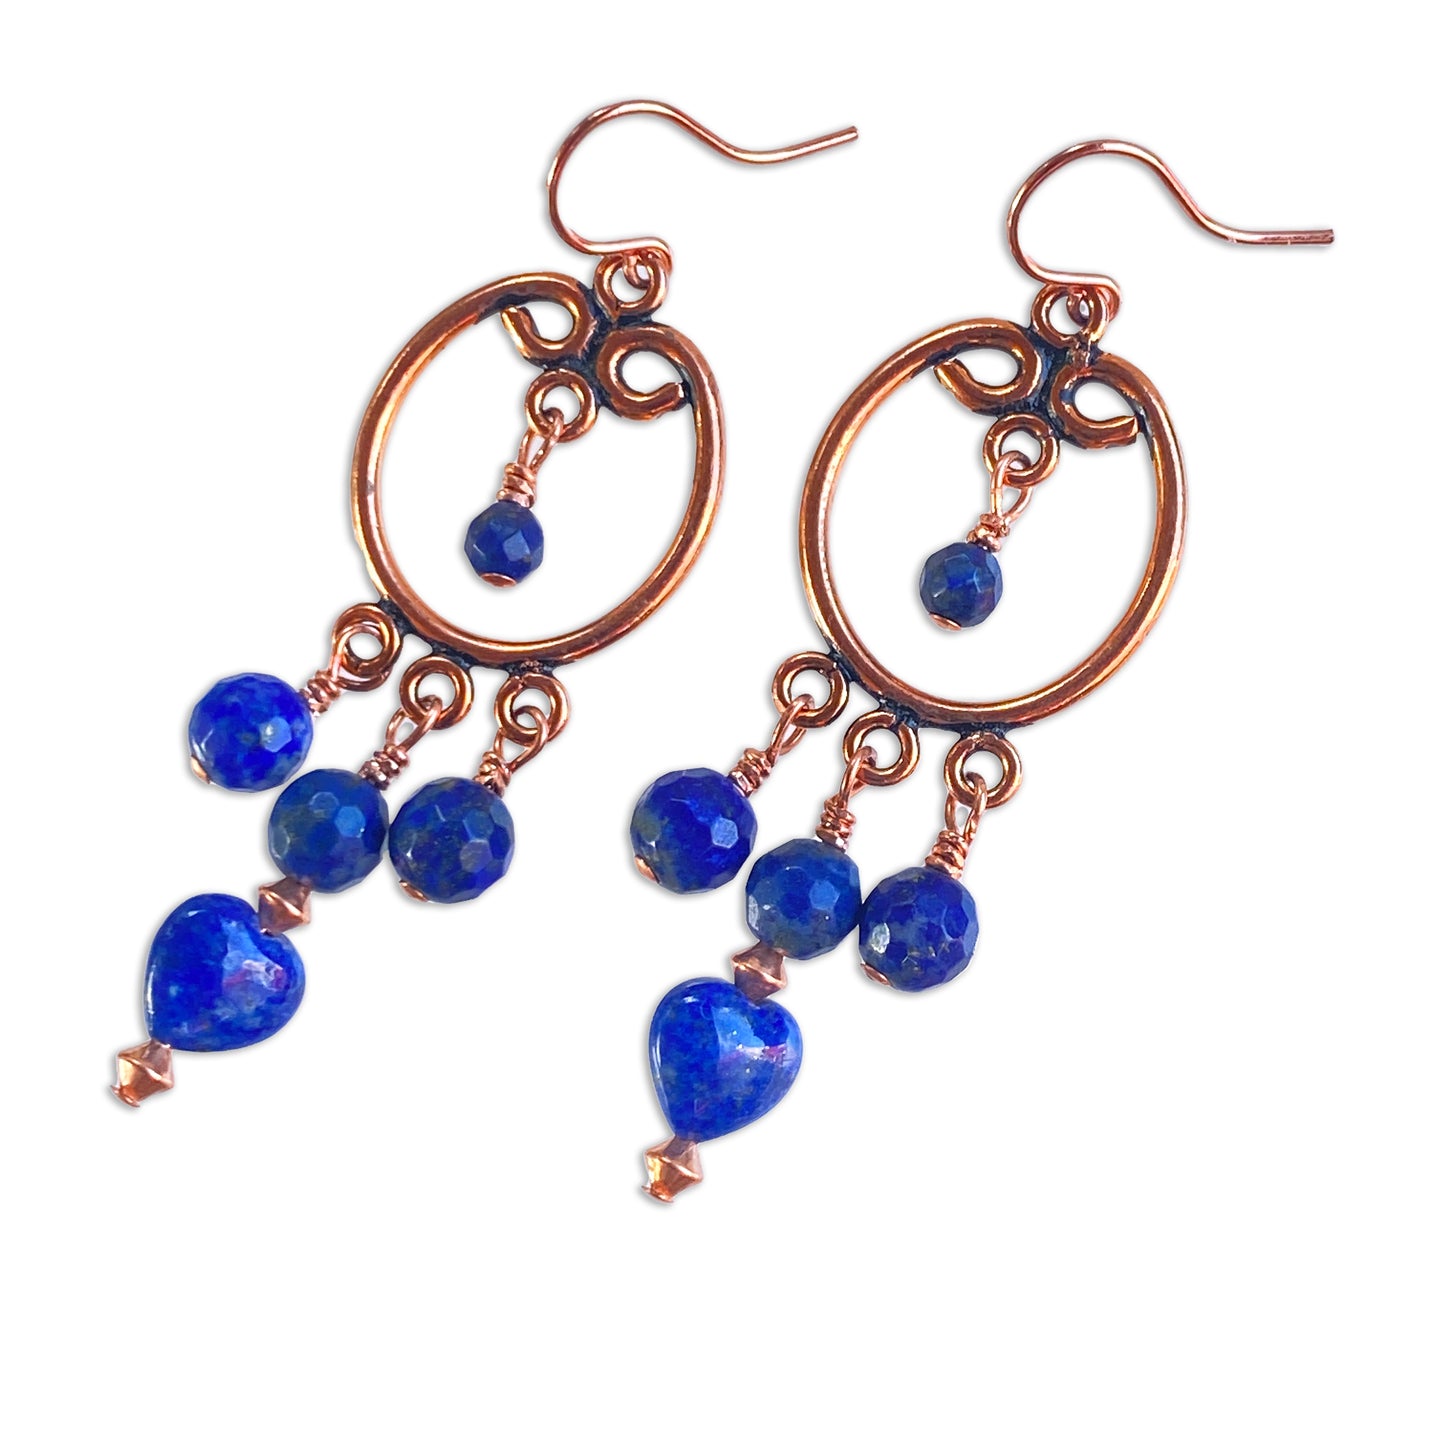 Lapis Lazuli gemstone and Copper Chandelier earrings